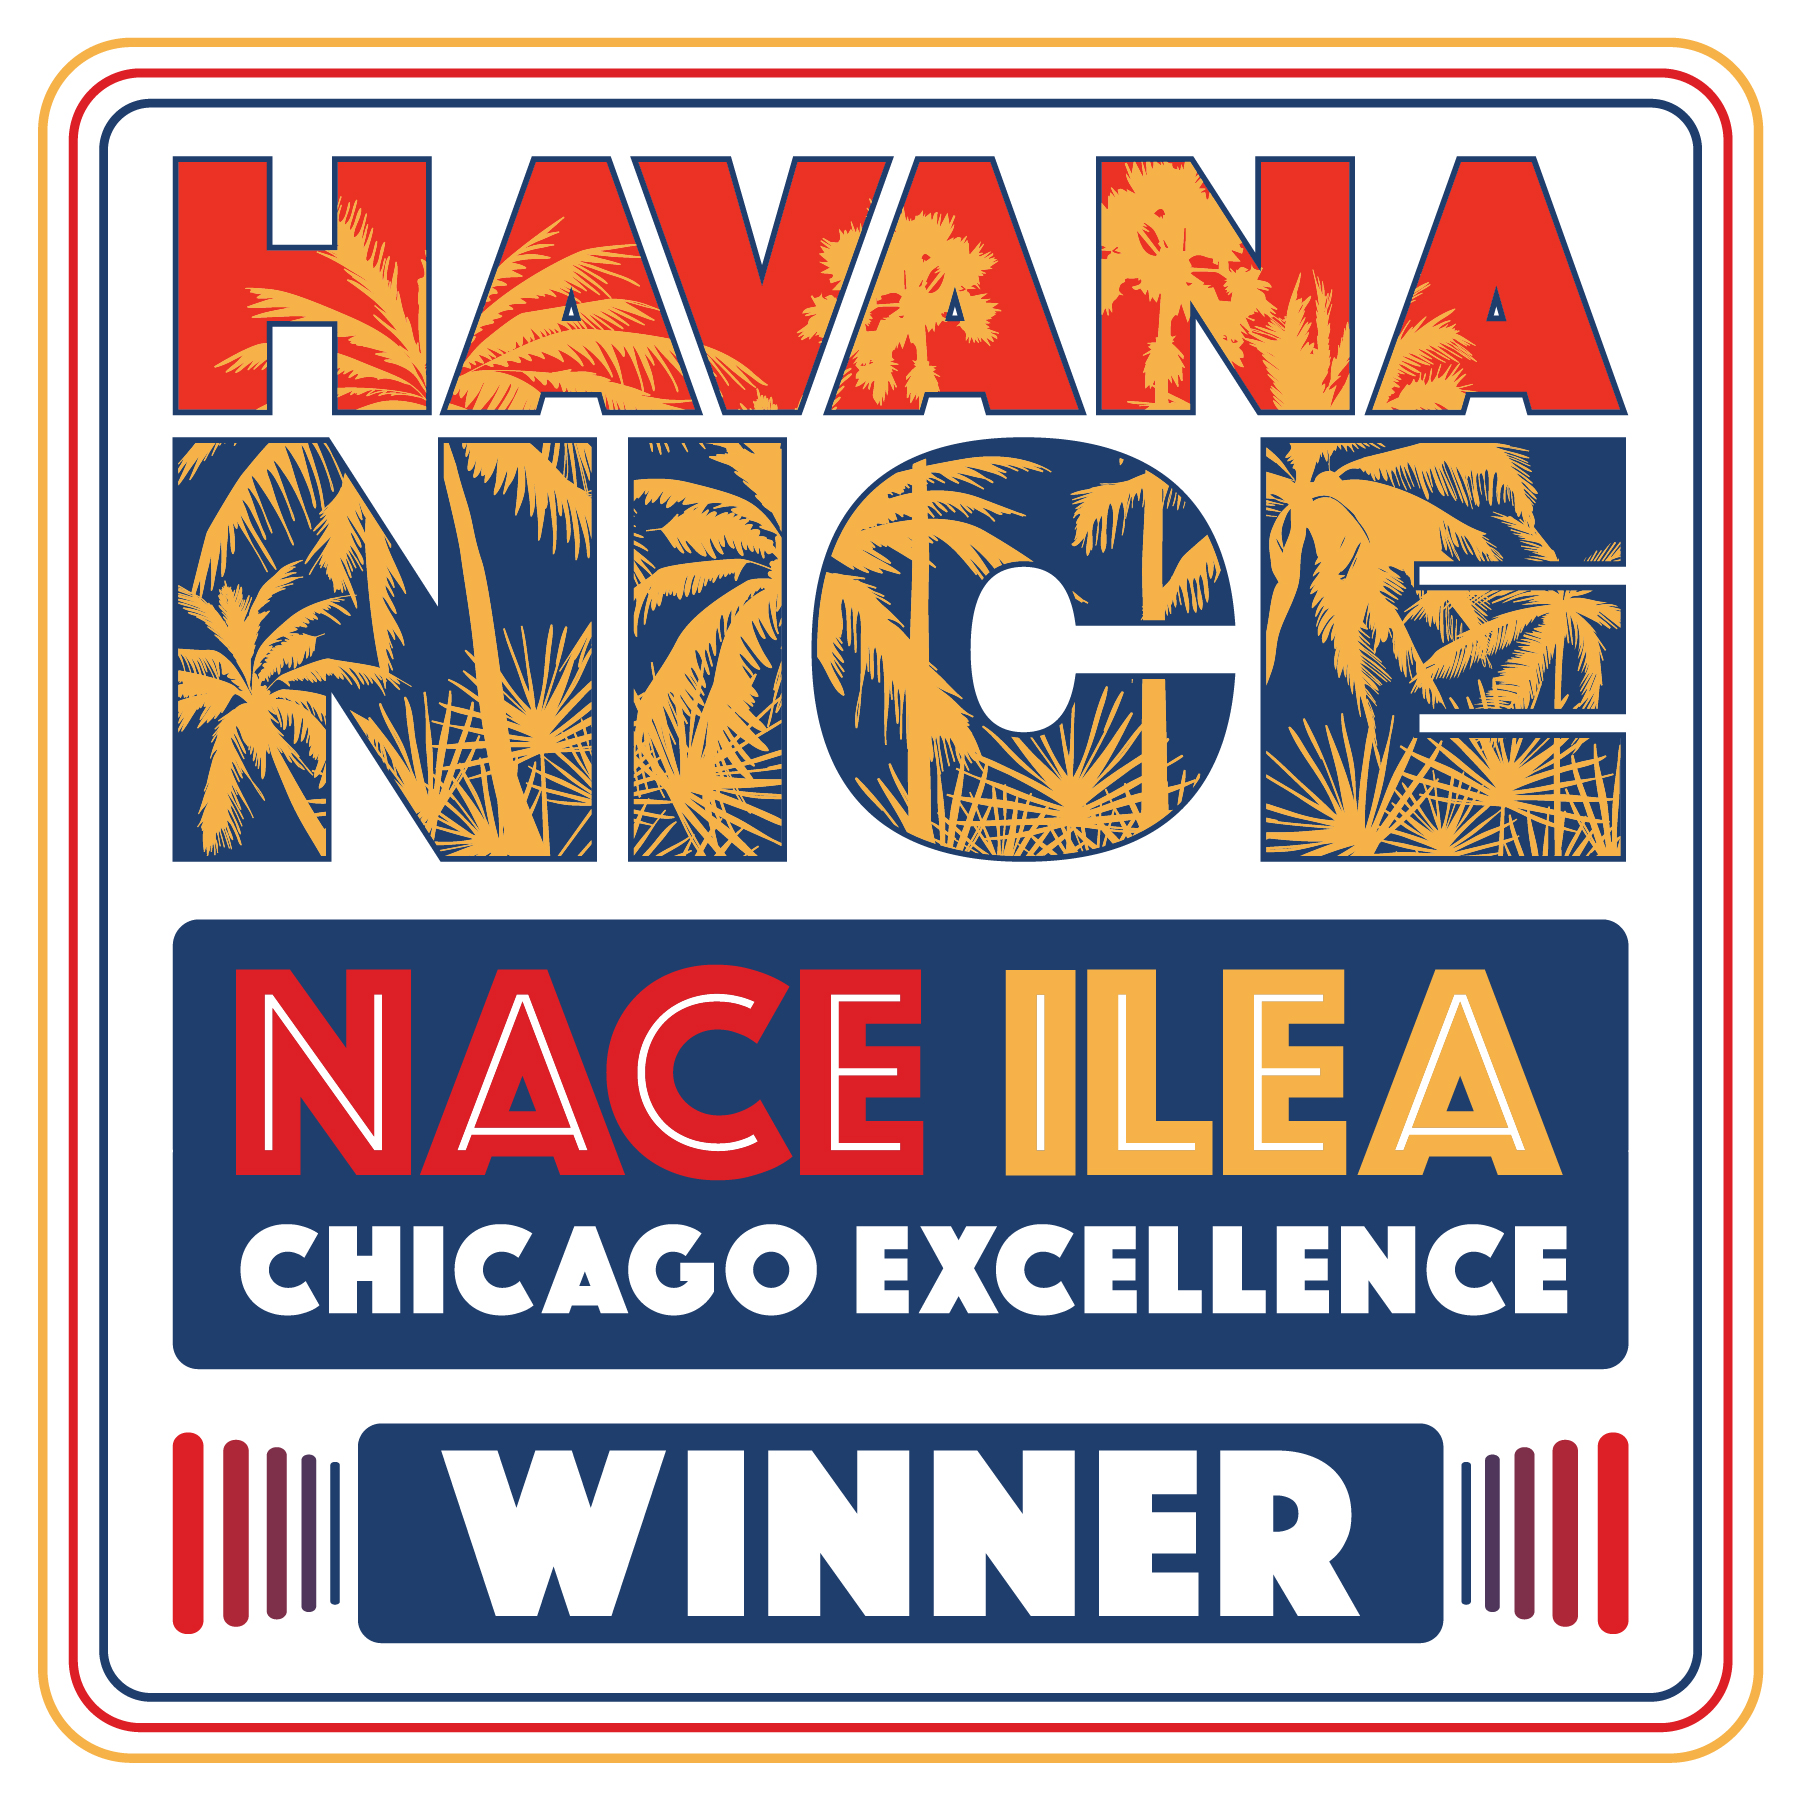 Havana NICE NACE ILEA Chicago Excellence Nominee